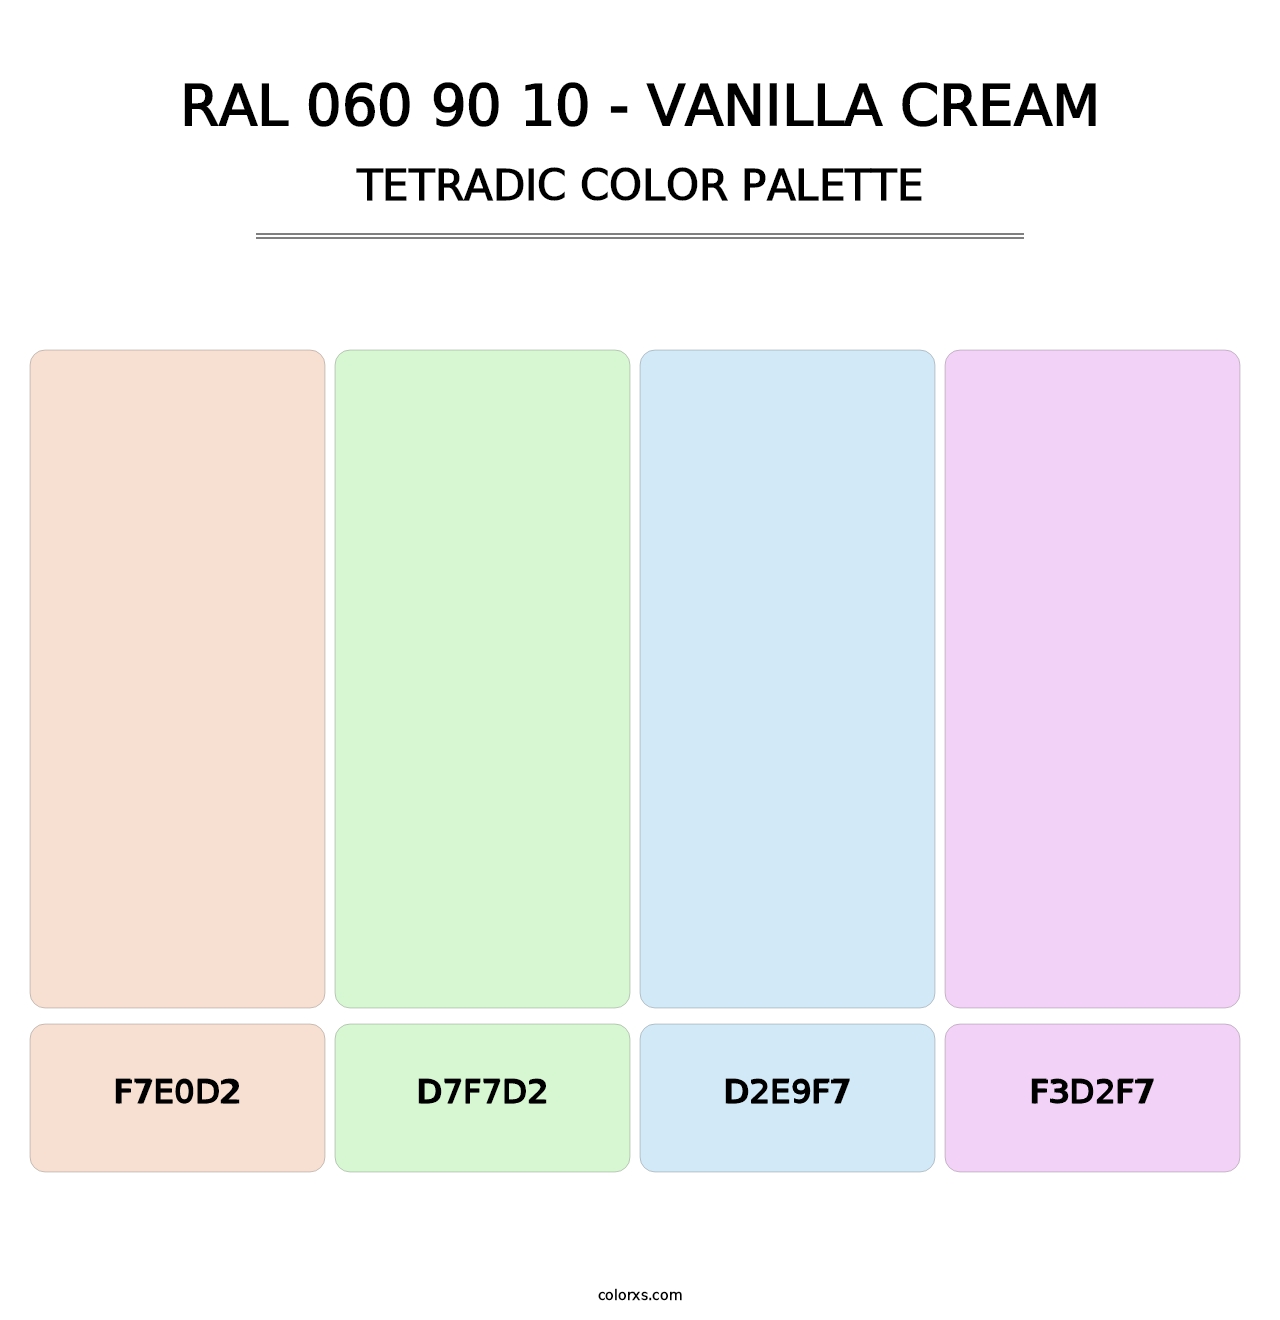 RAL 060 90 10 - Vanilla Cream - Tetradic Color Palette